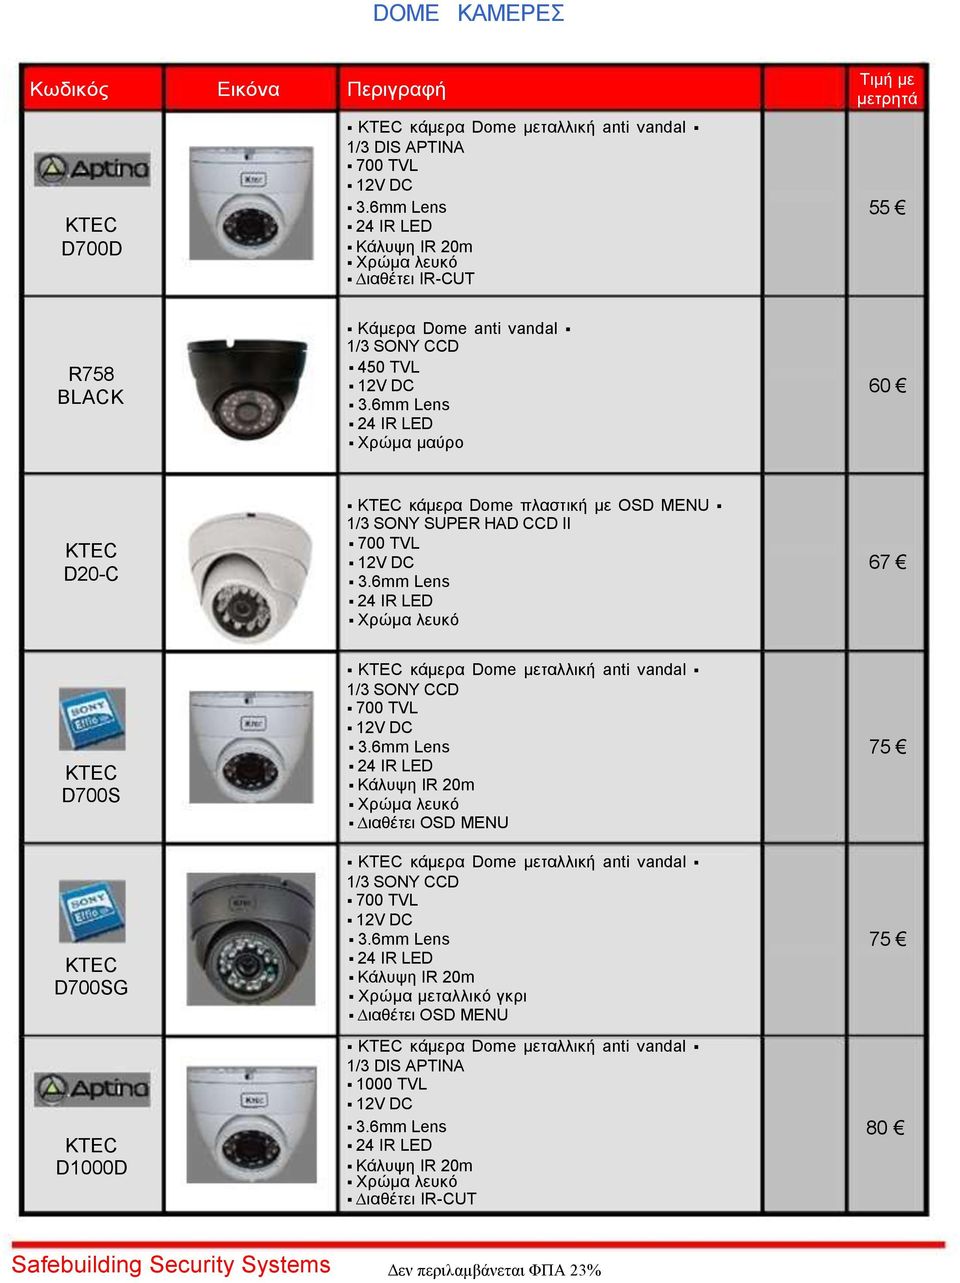 6mm Lens 24 IR LED Χρώμα μαύρο 60 D20-C κάμερα Dome πλαστική με OSD MENU 1/3 SONY SUPER HAD CCD II 3.